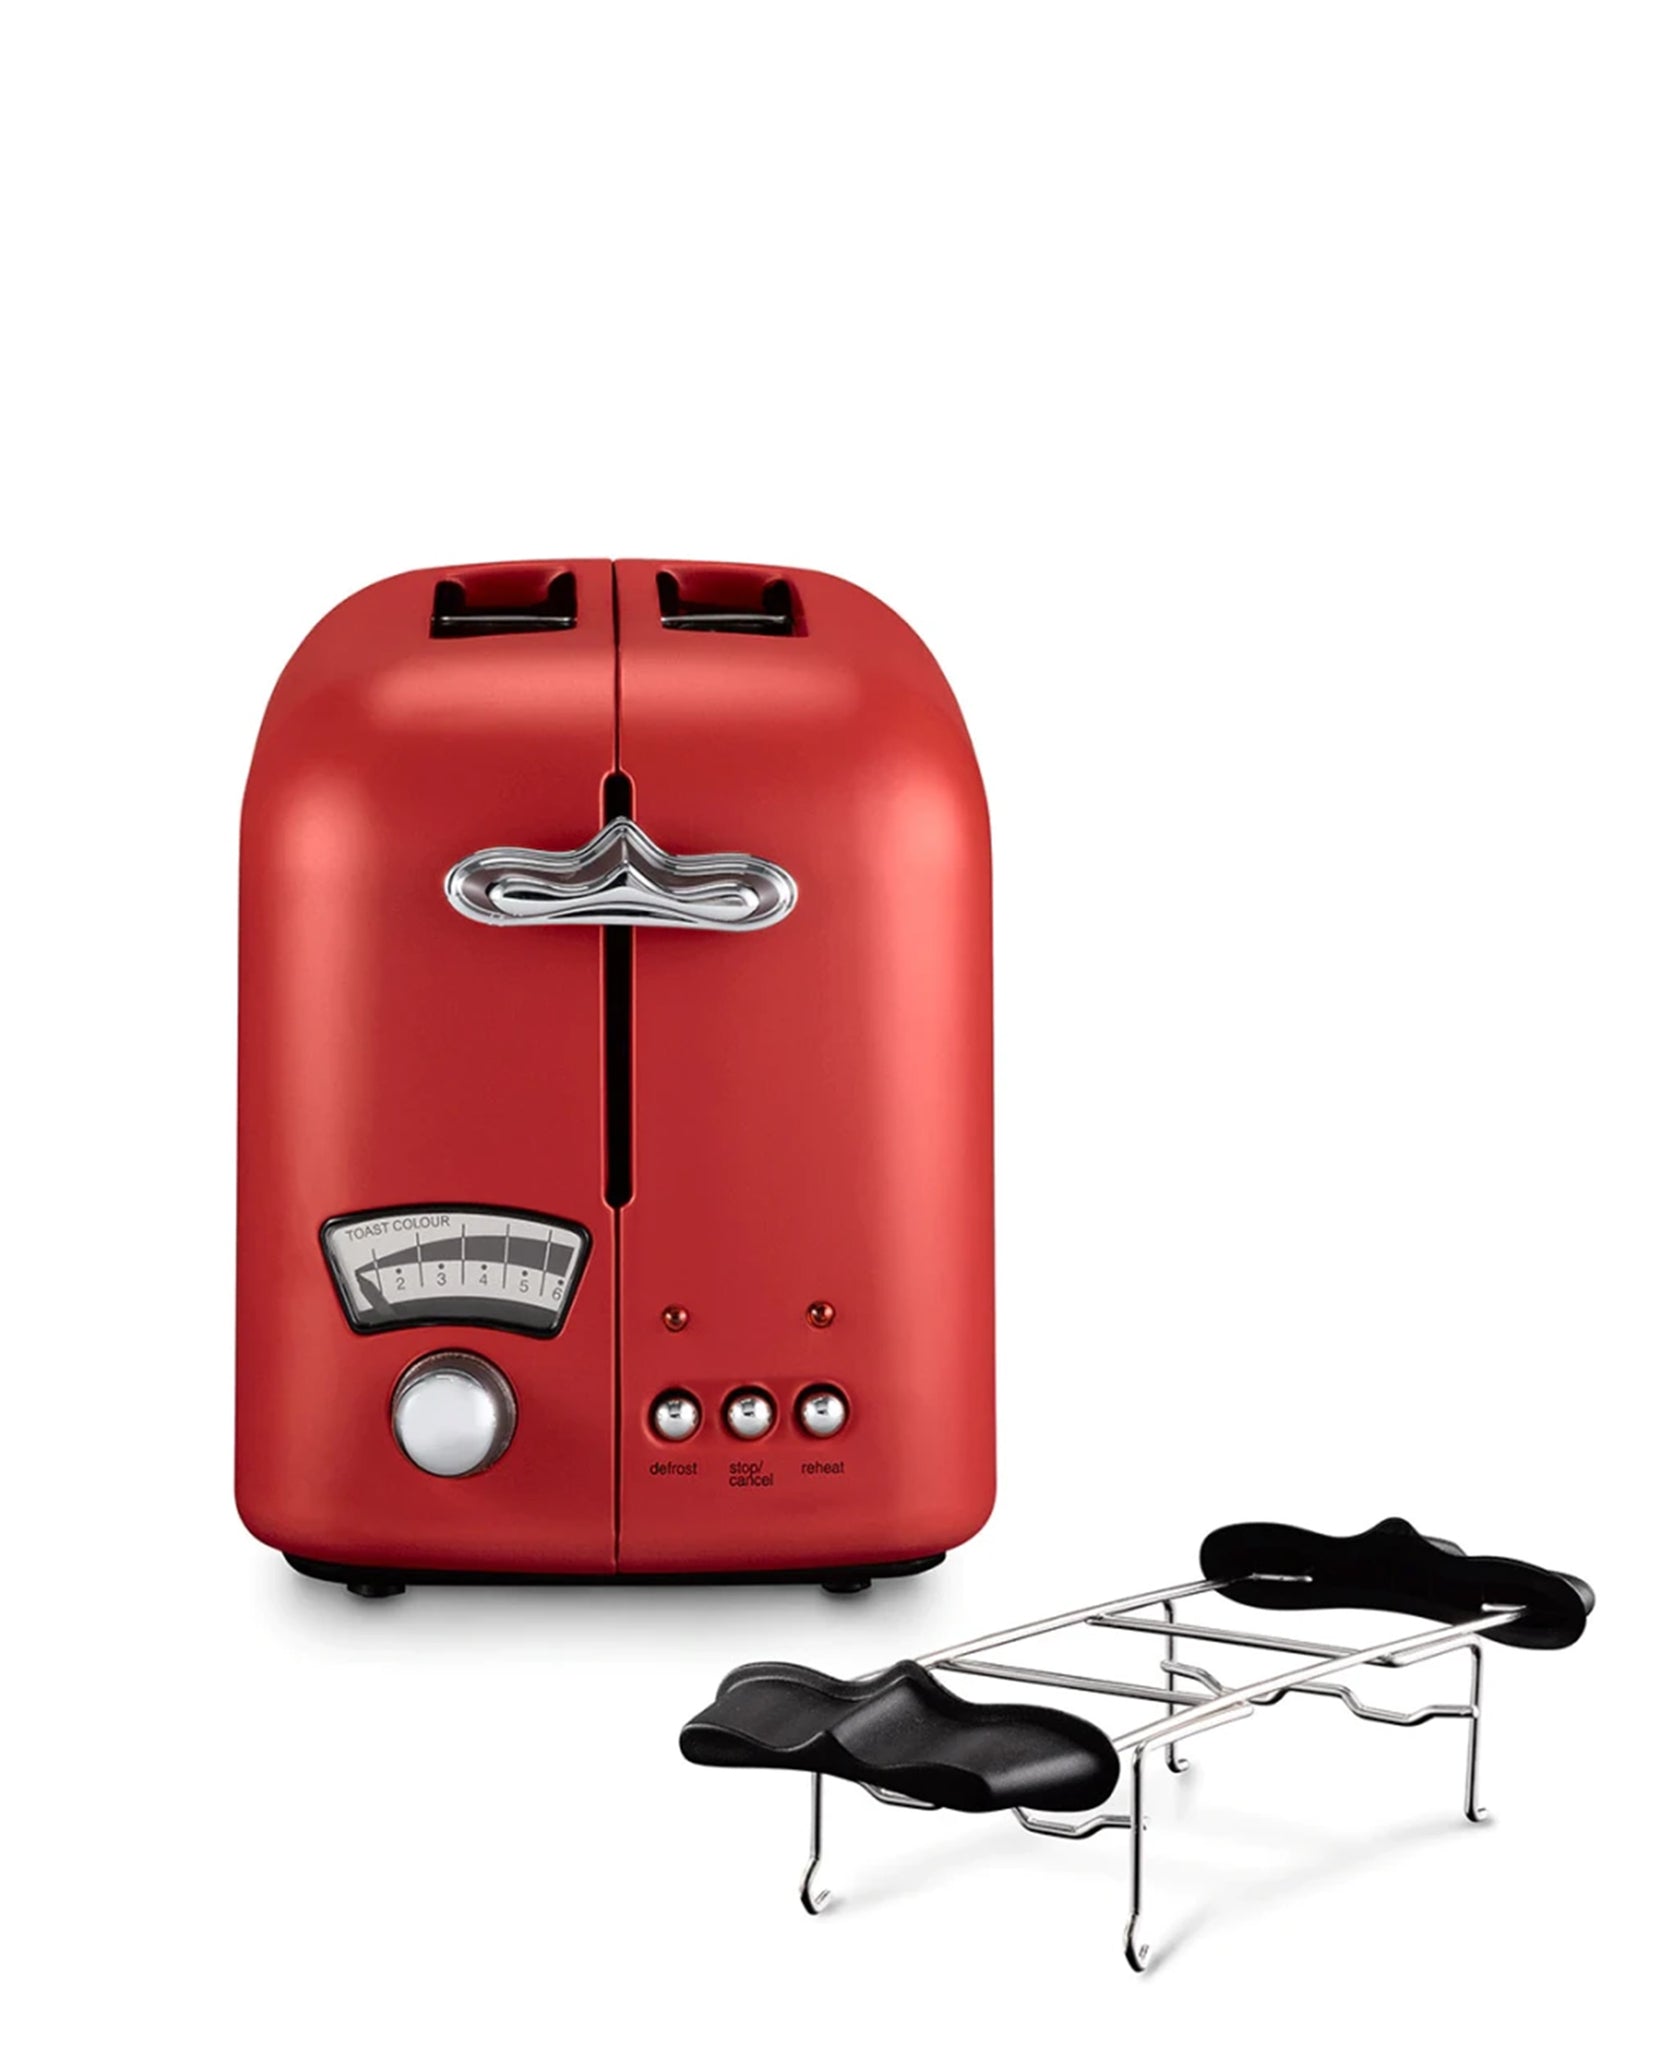 Delonghi Argento Toaster 2 Slice - Red